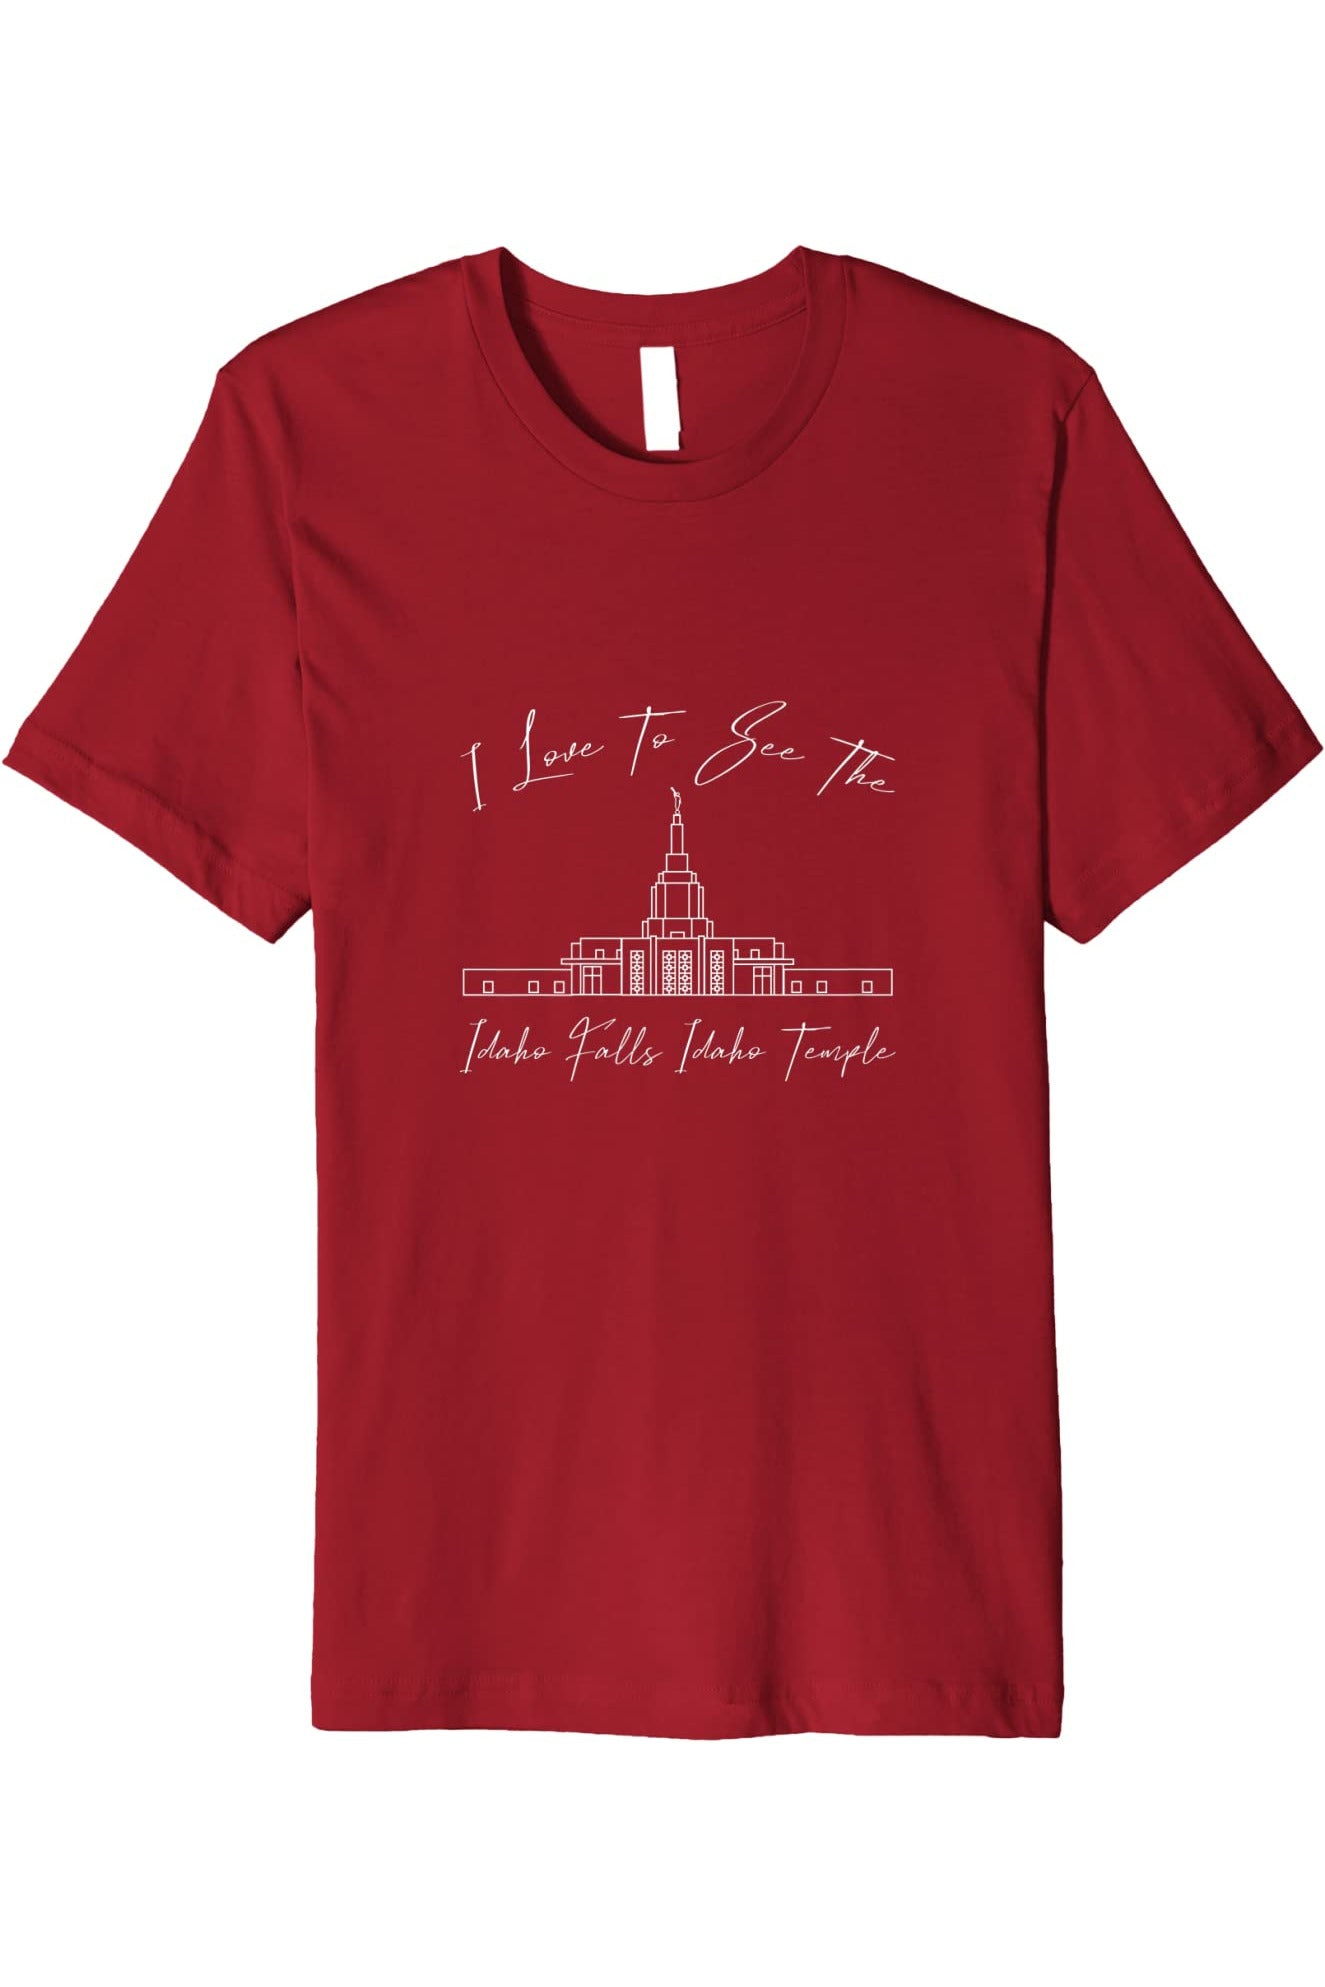 Idaho Falls Idaho Temple T-Shirt - Premium - Calligraphy Style (English) US